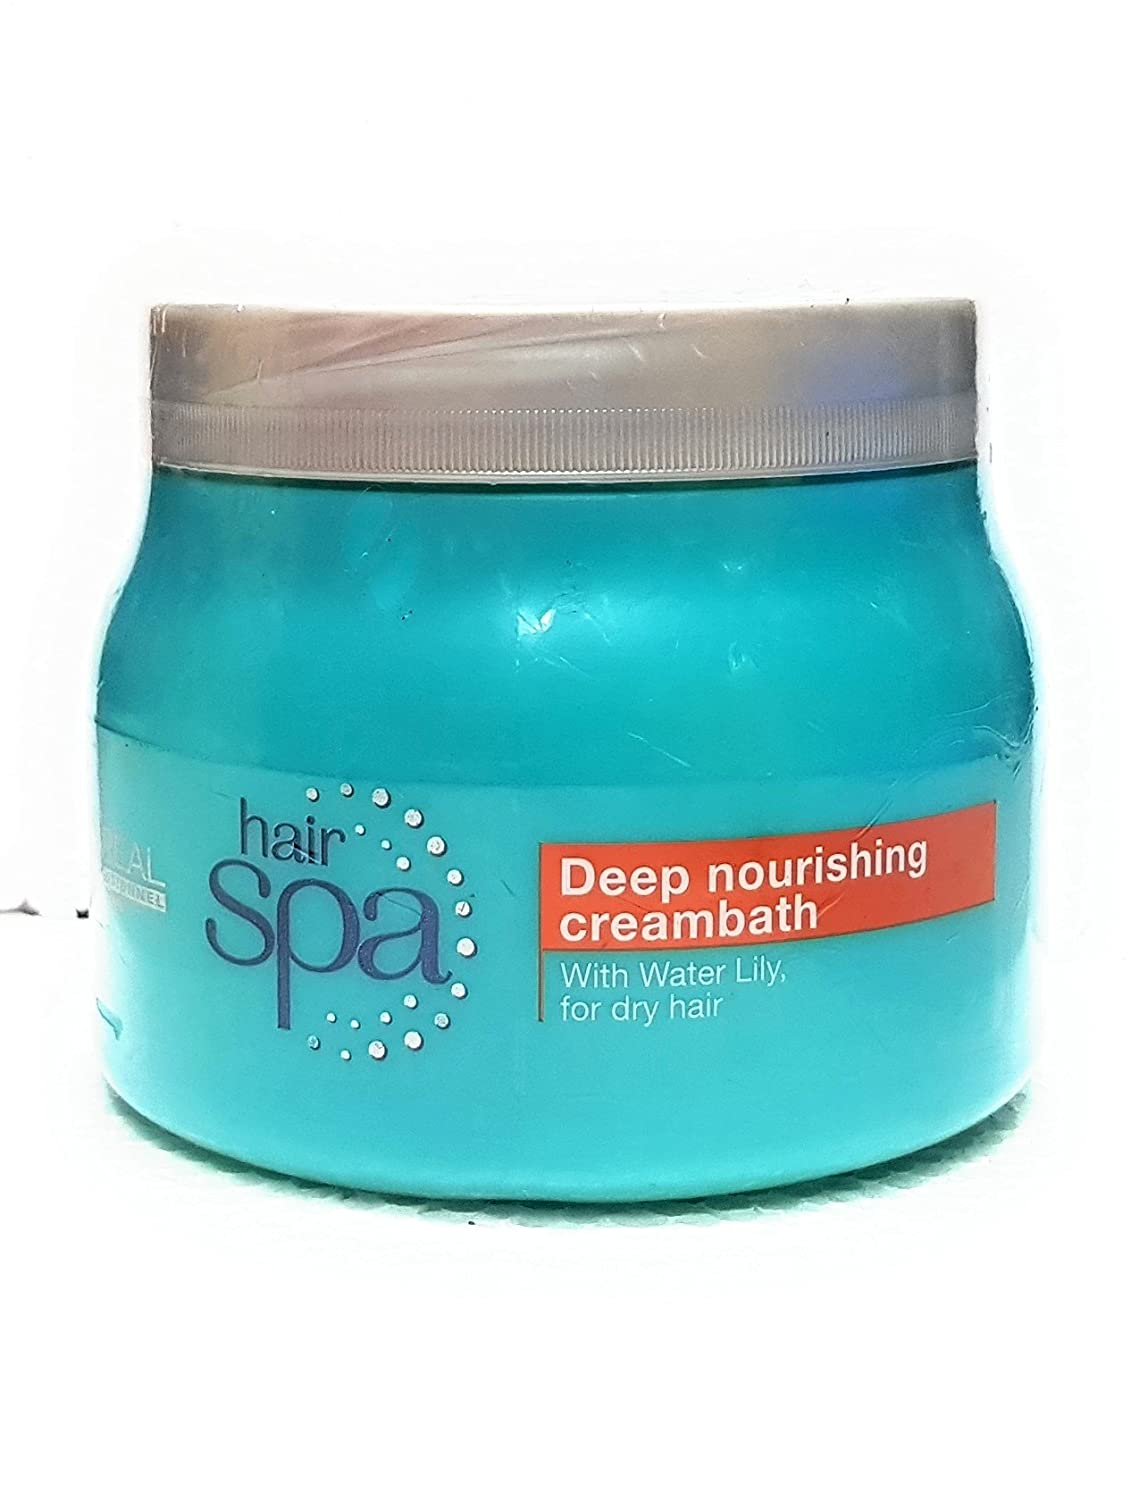 L'Oreal Professional Hair Spa Deep Nourishing Creambath, 490gm –  MinerwaShopping